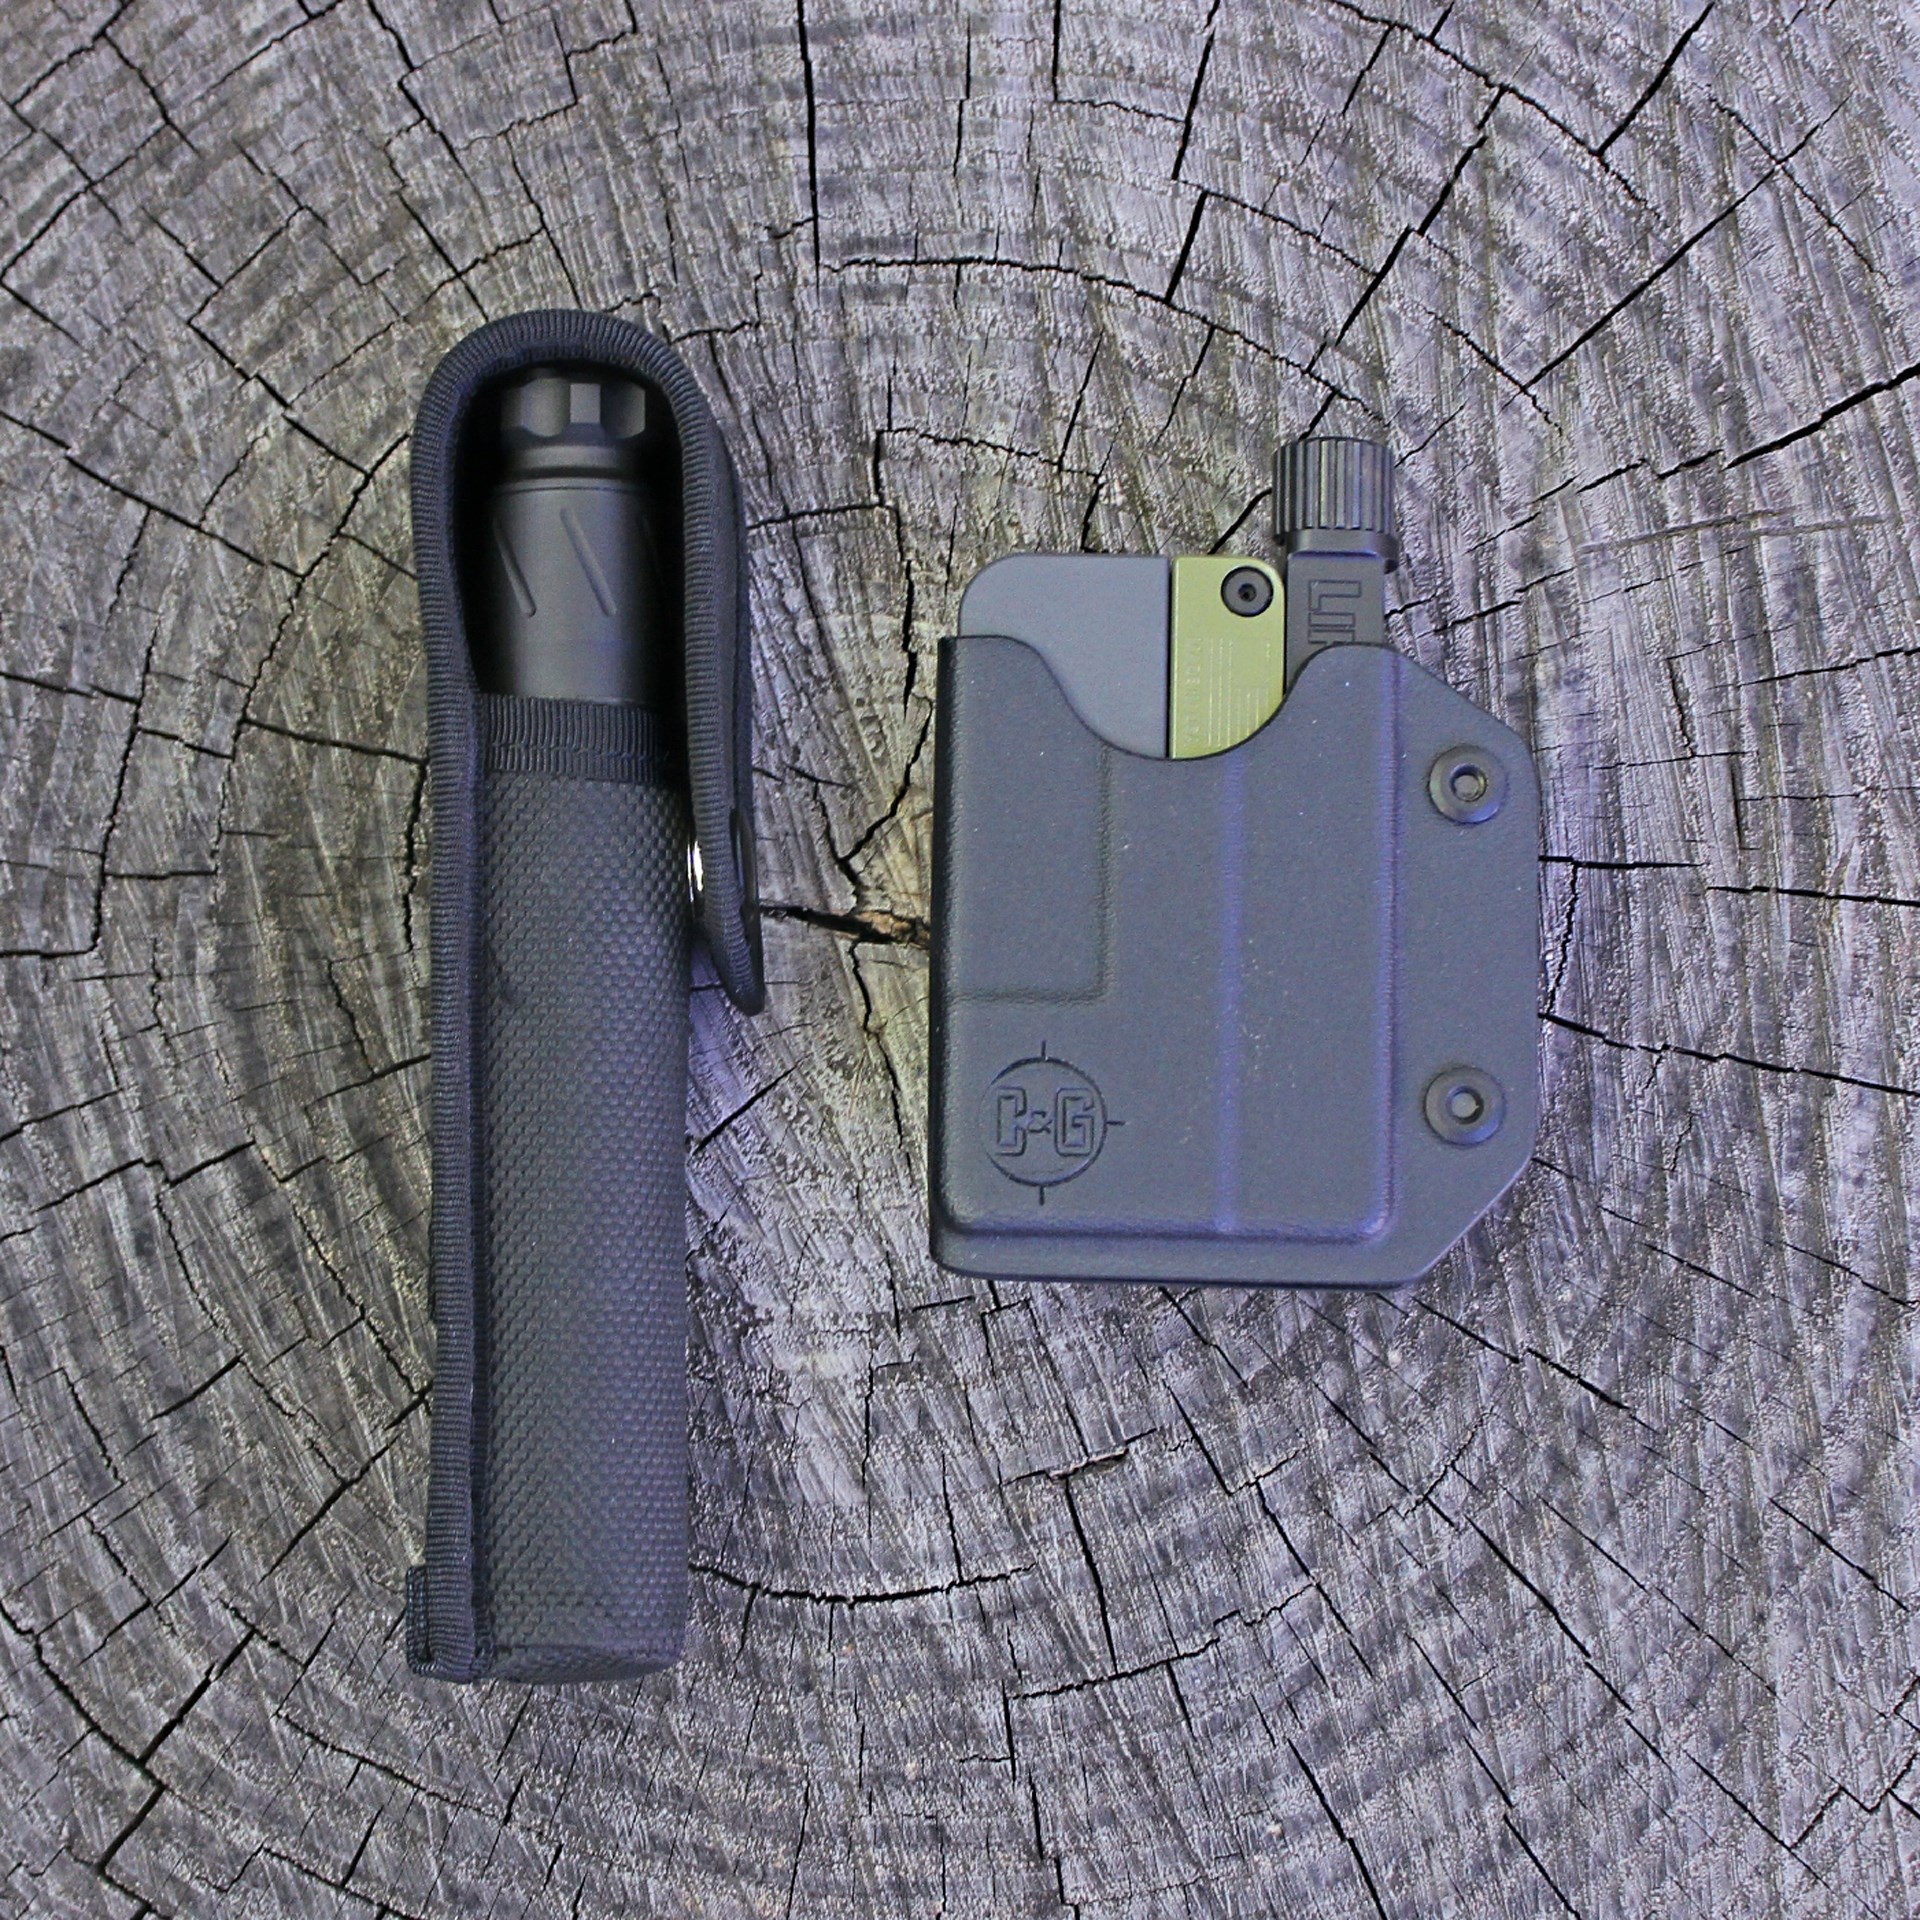 Trailblazer LifeCard single-shot pistol in kydex holster suppressor in holster shown on wood log